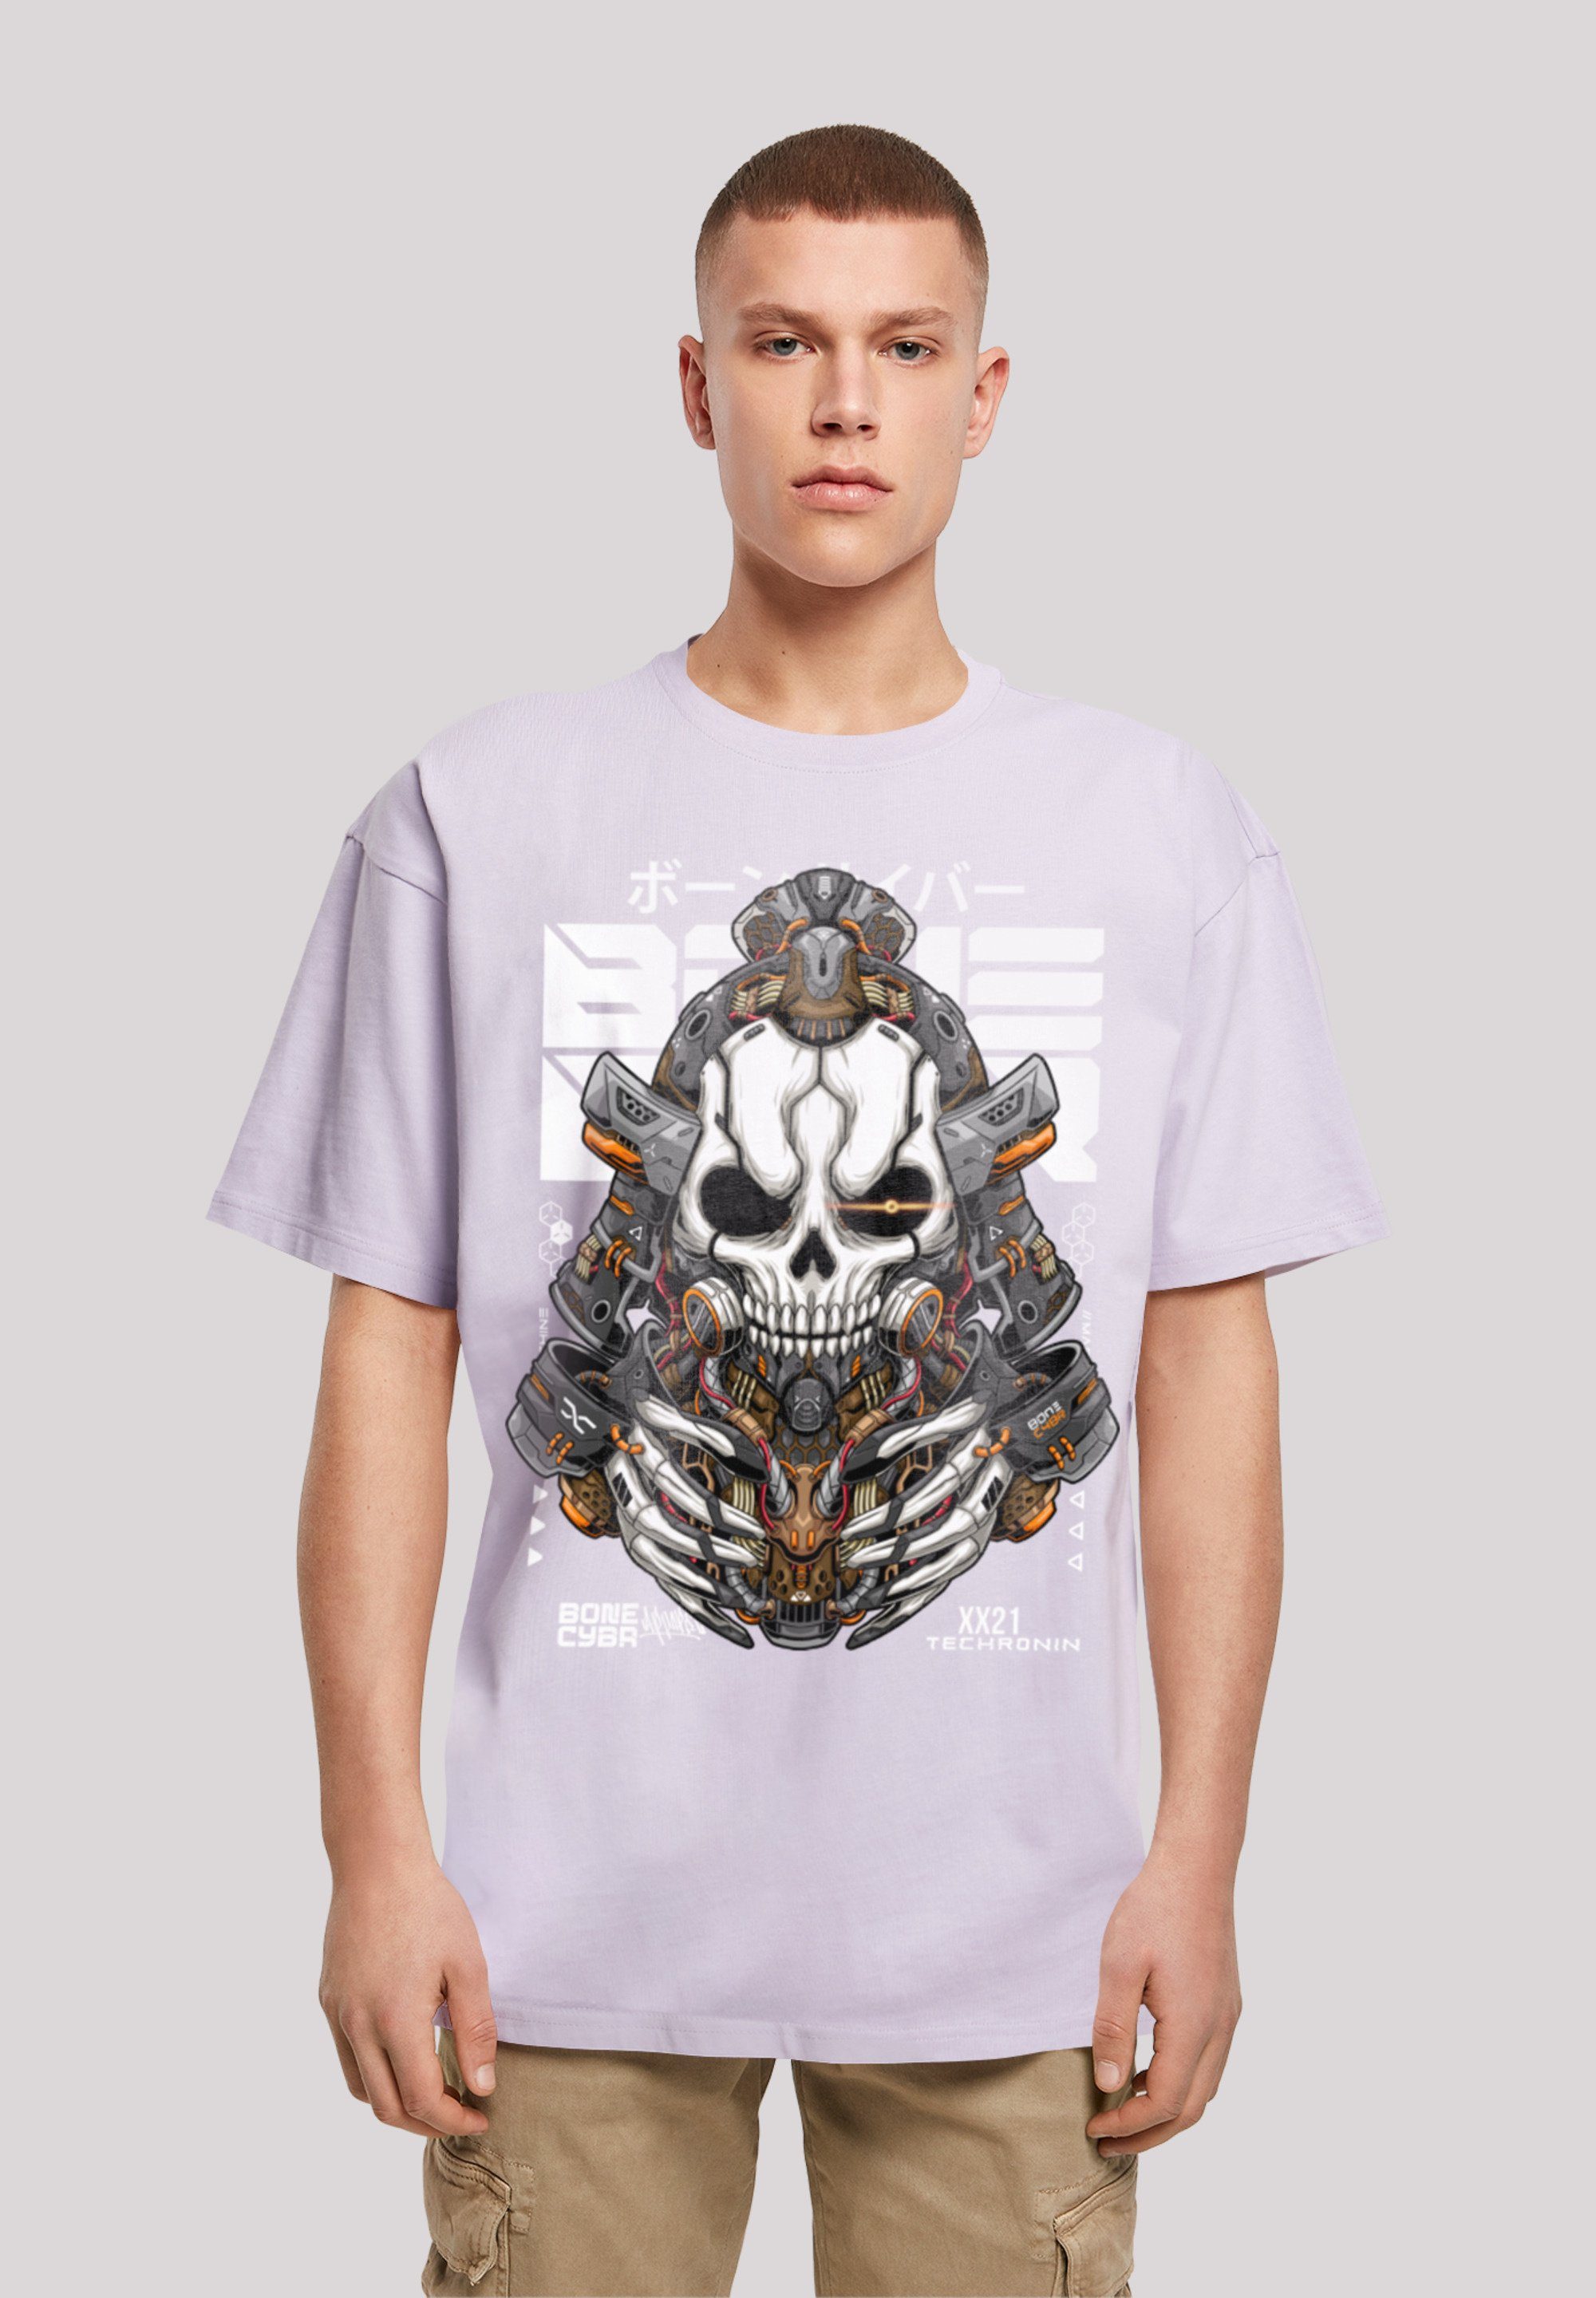 Techronin F4NT4STIC Bone CYBERPUNK T-Shirt Cyber Print lilac STYLES